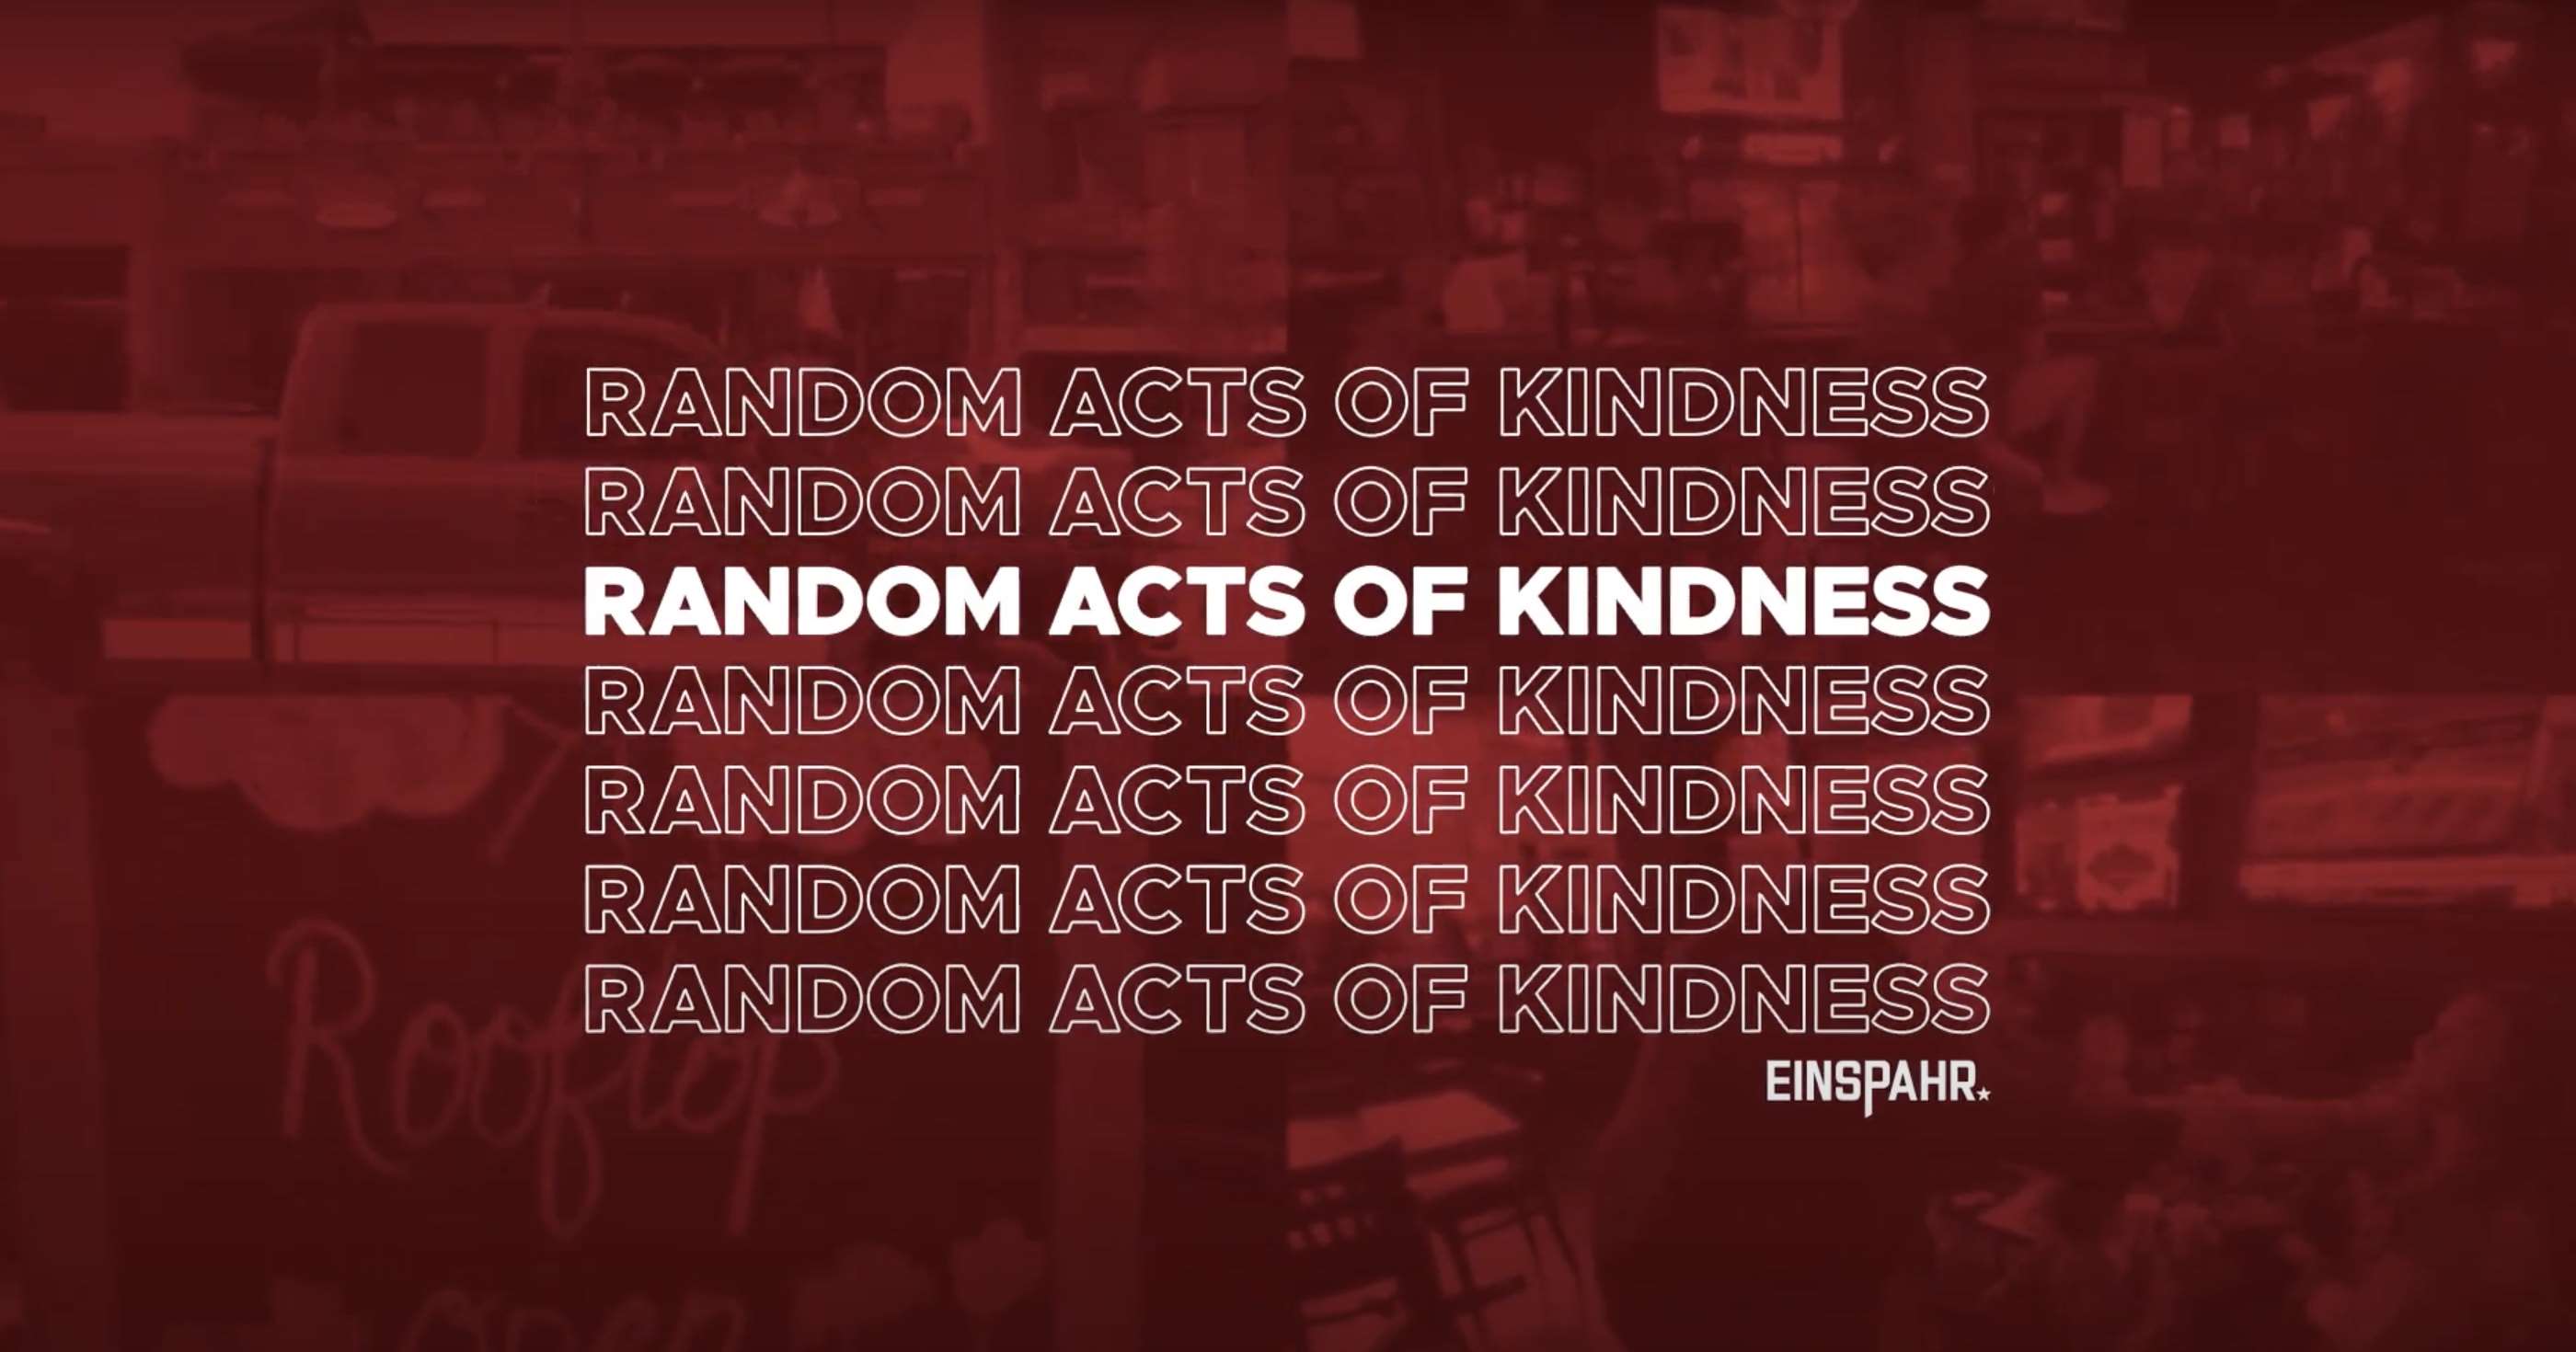 Random Acts of Kindness intro image